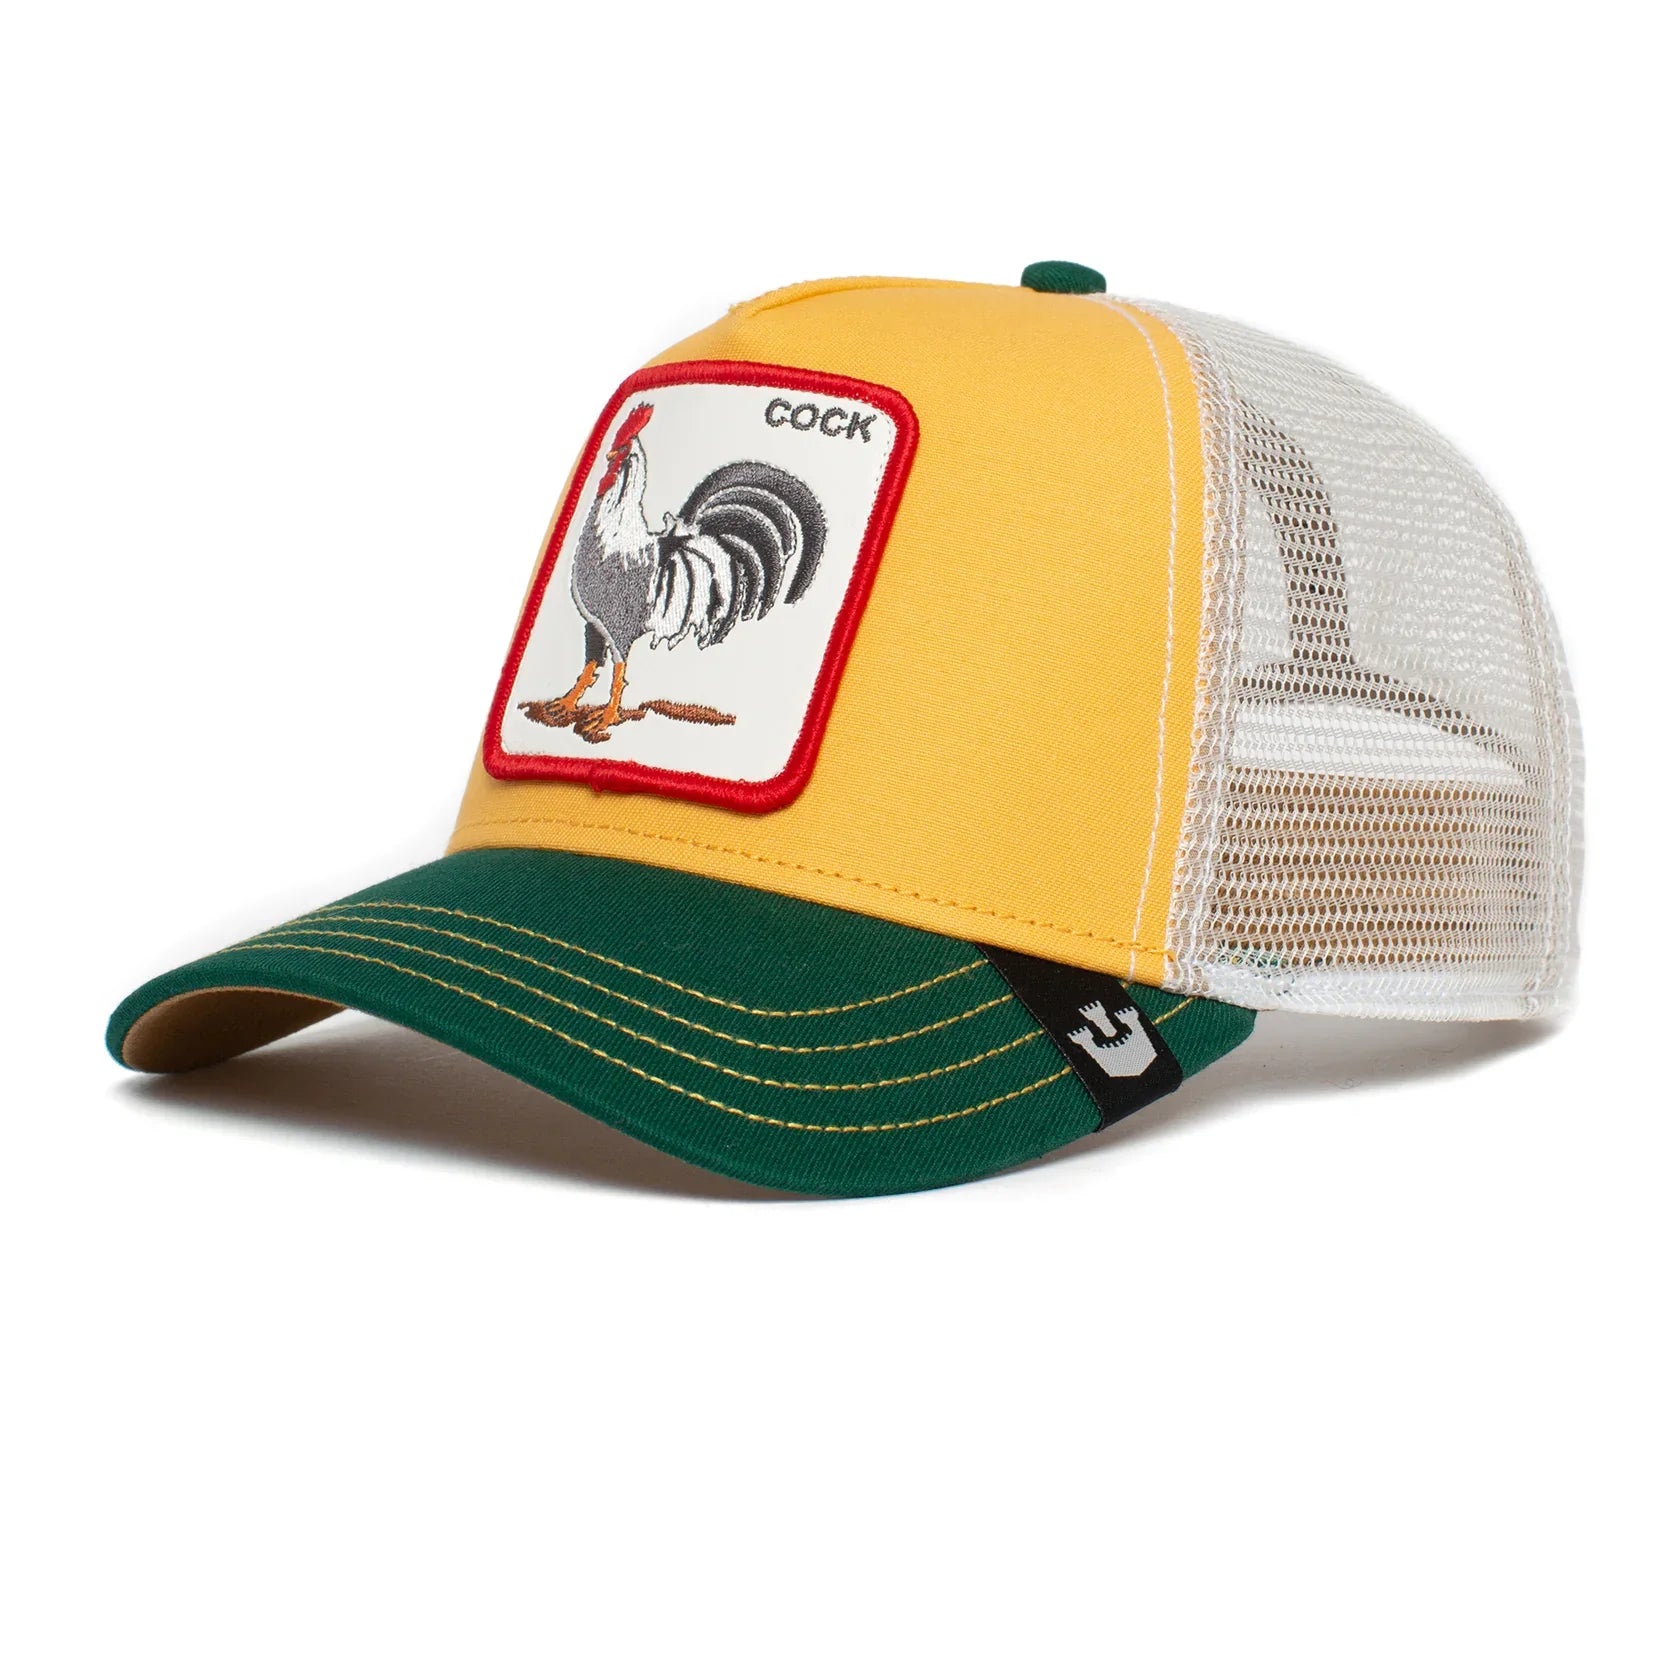 'Goorin Bros. The Cock Trucker Hat' in 'Yellow' colour